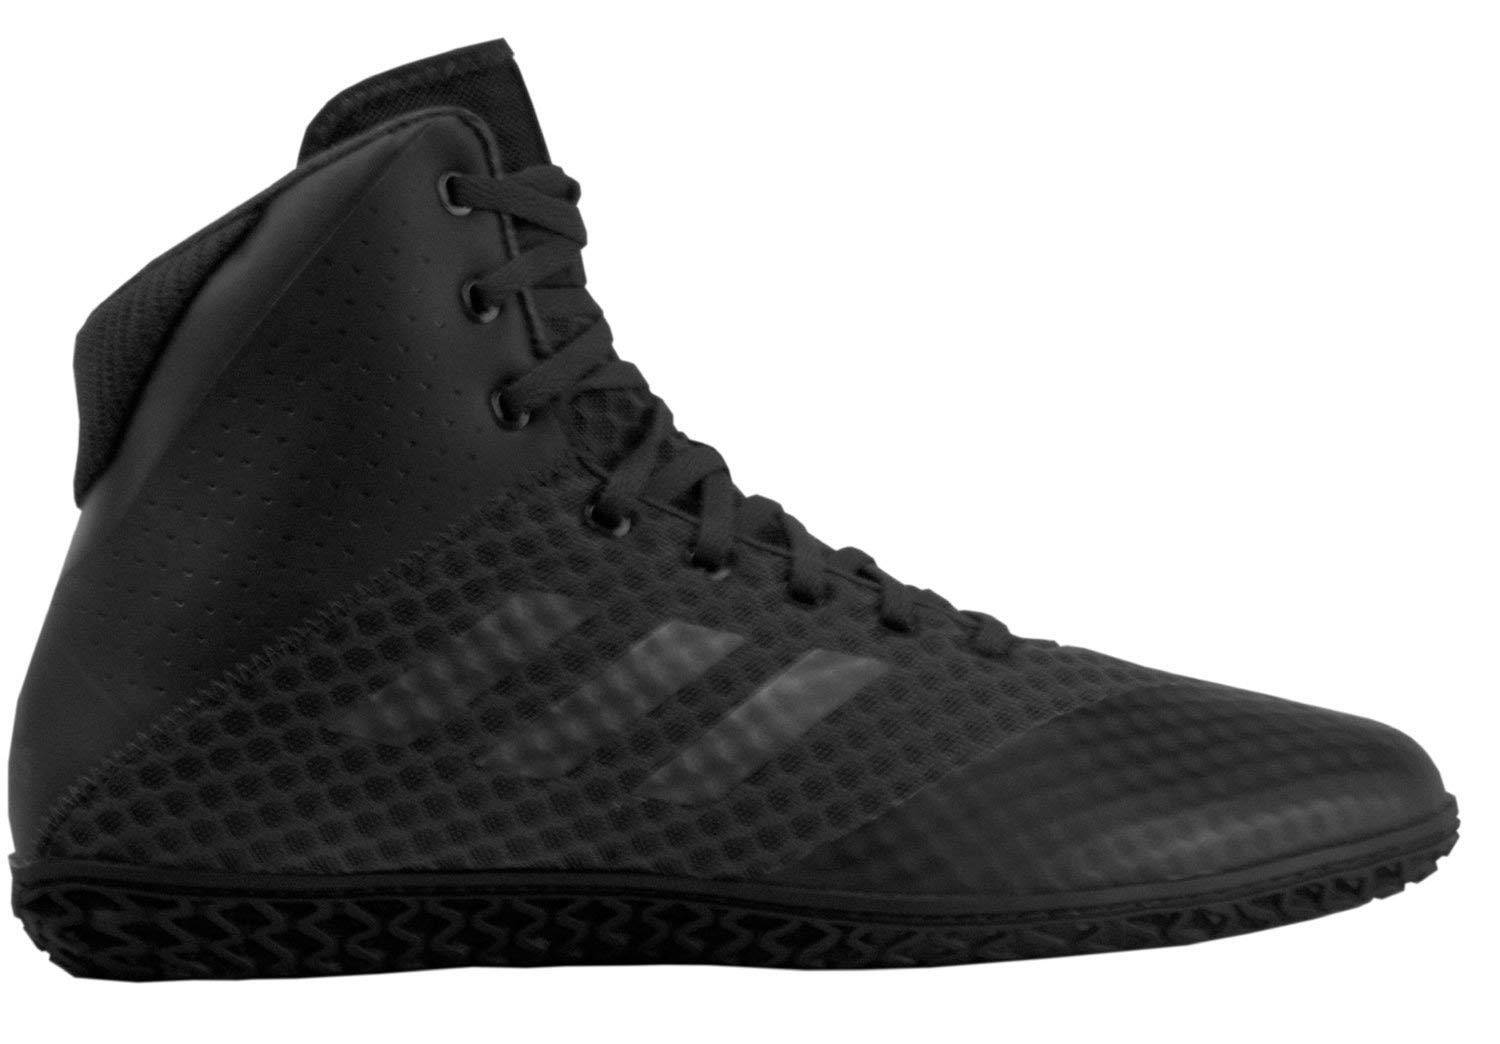 adidas Mat Wizard Wrestling Shoes Size 9 Black/carbon sale online | eBay